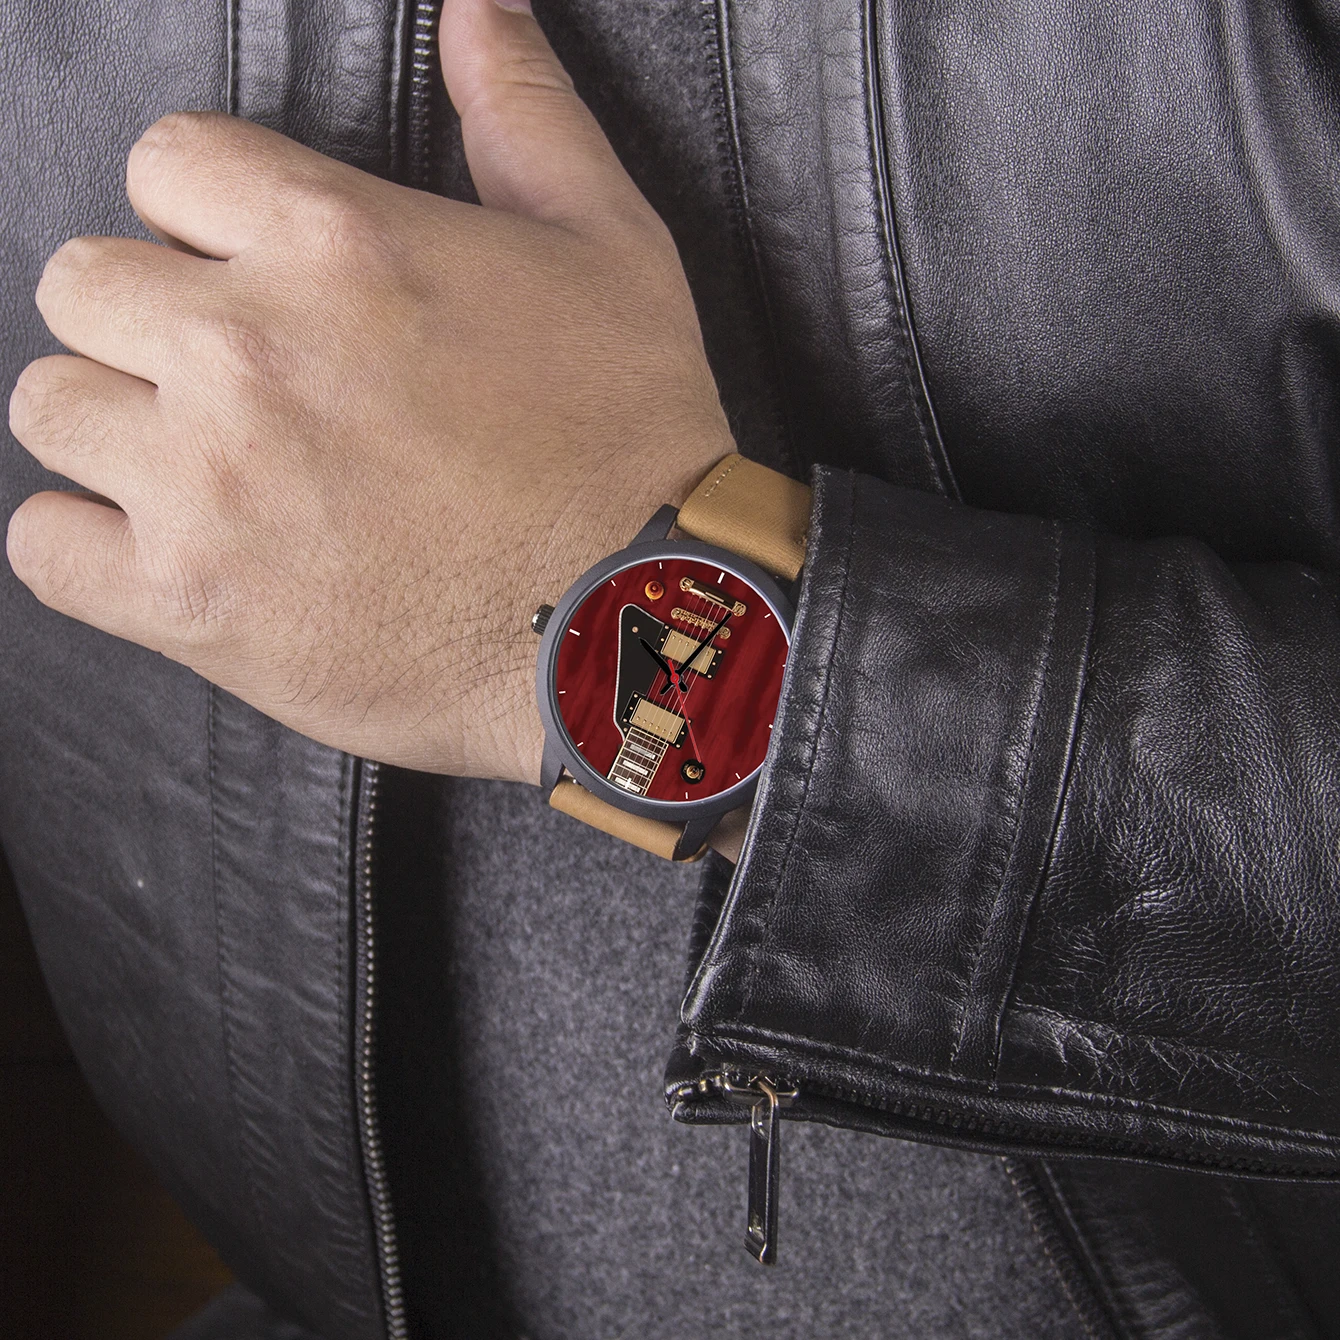 Factory Direct Guitar Bass Design Customized Dial Fashionable Cool Decorative Men's Quartz Wrist Watch Gifts For Musician